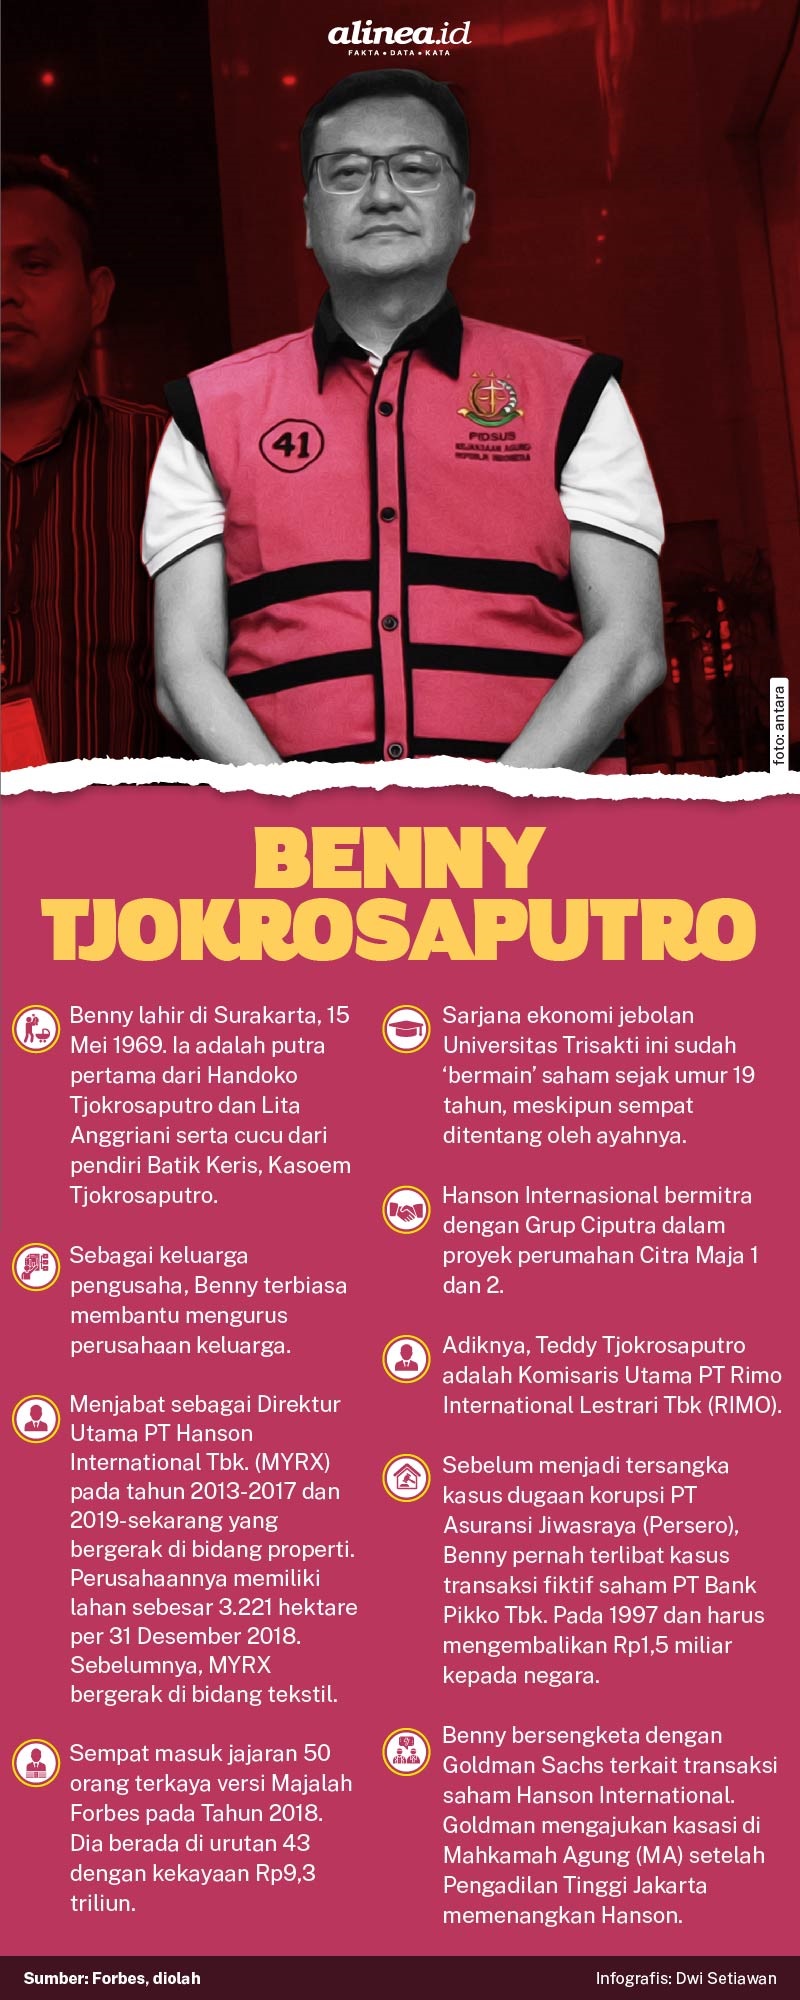 Infografik profil Benny Tjokrosaputro. Alinea.id/Dwi Setiawan